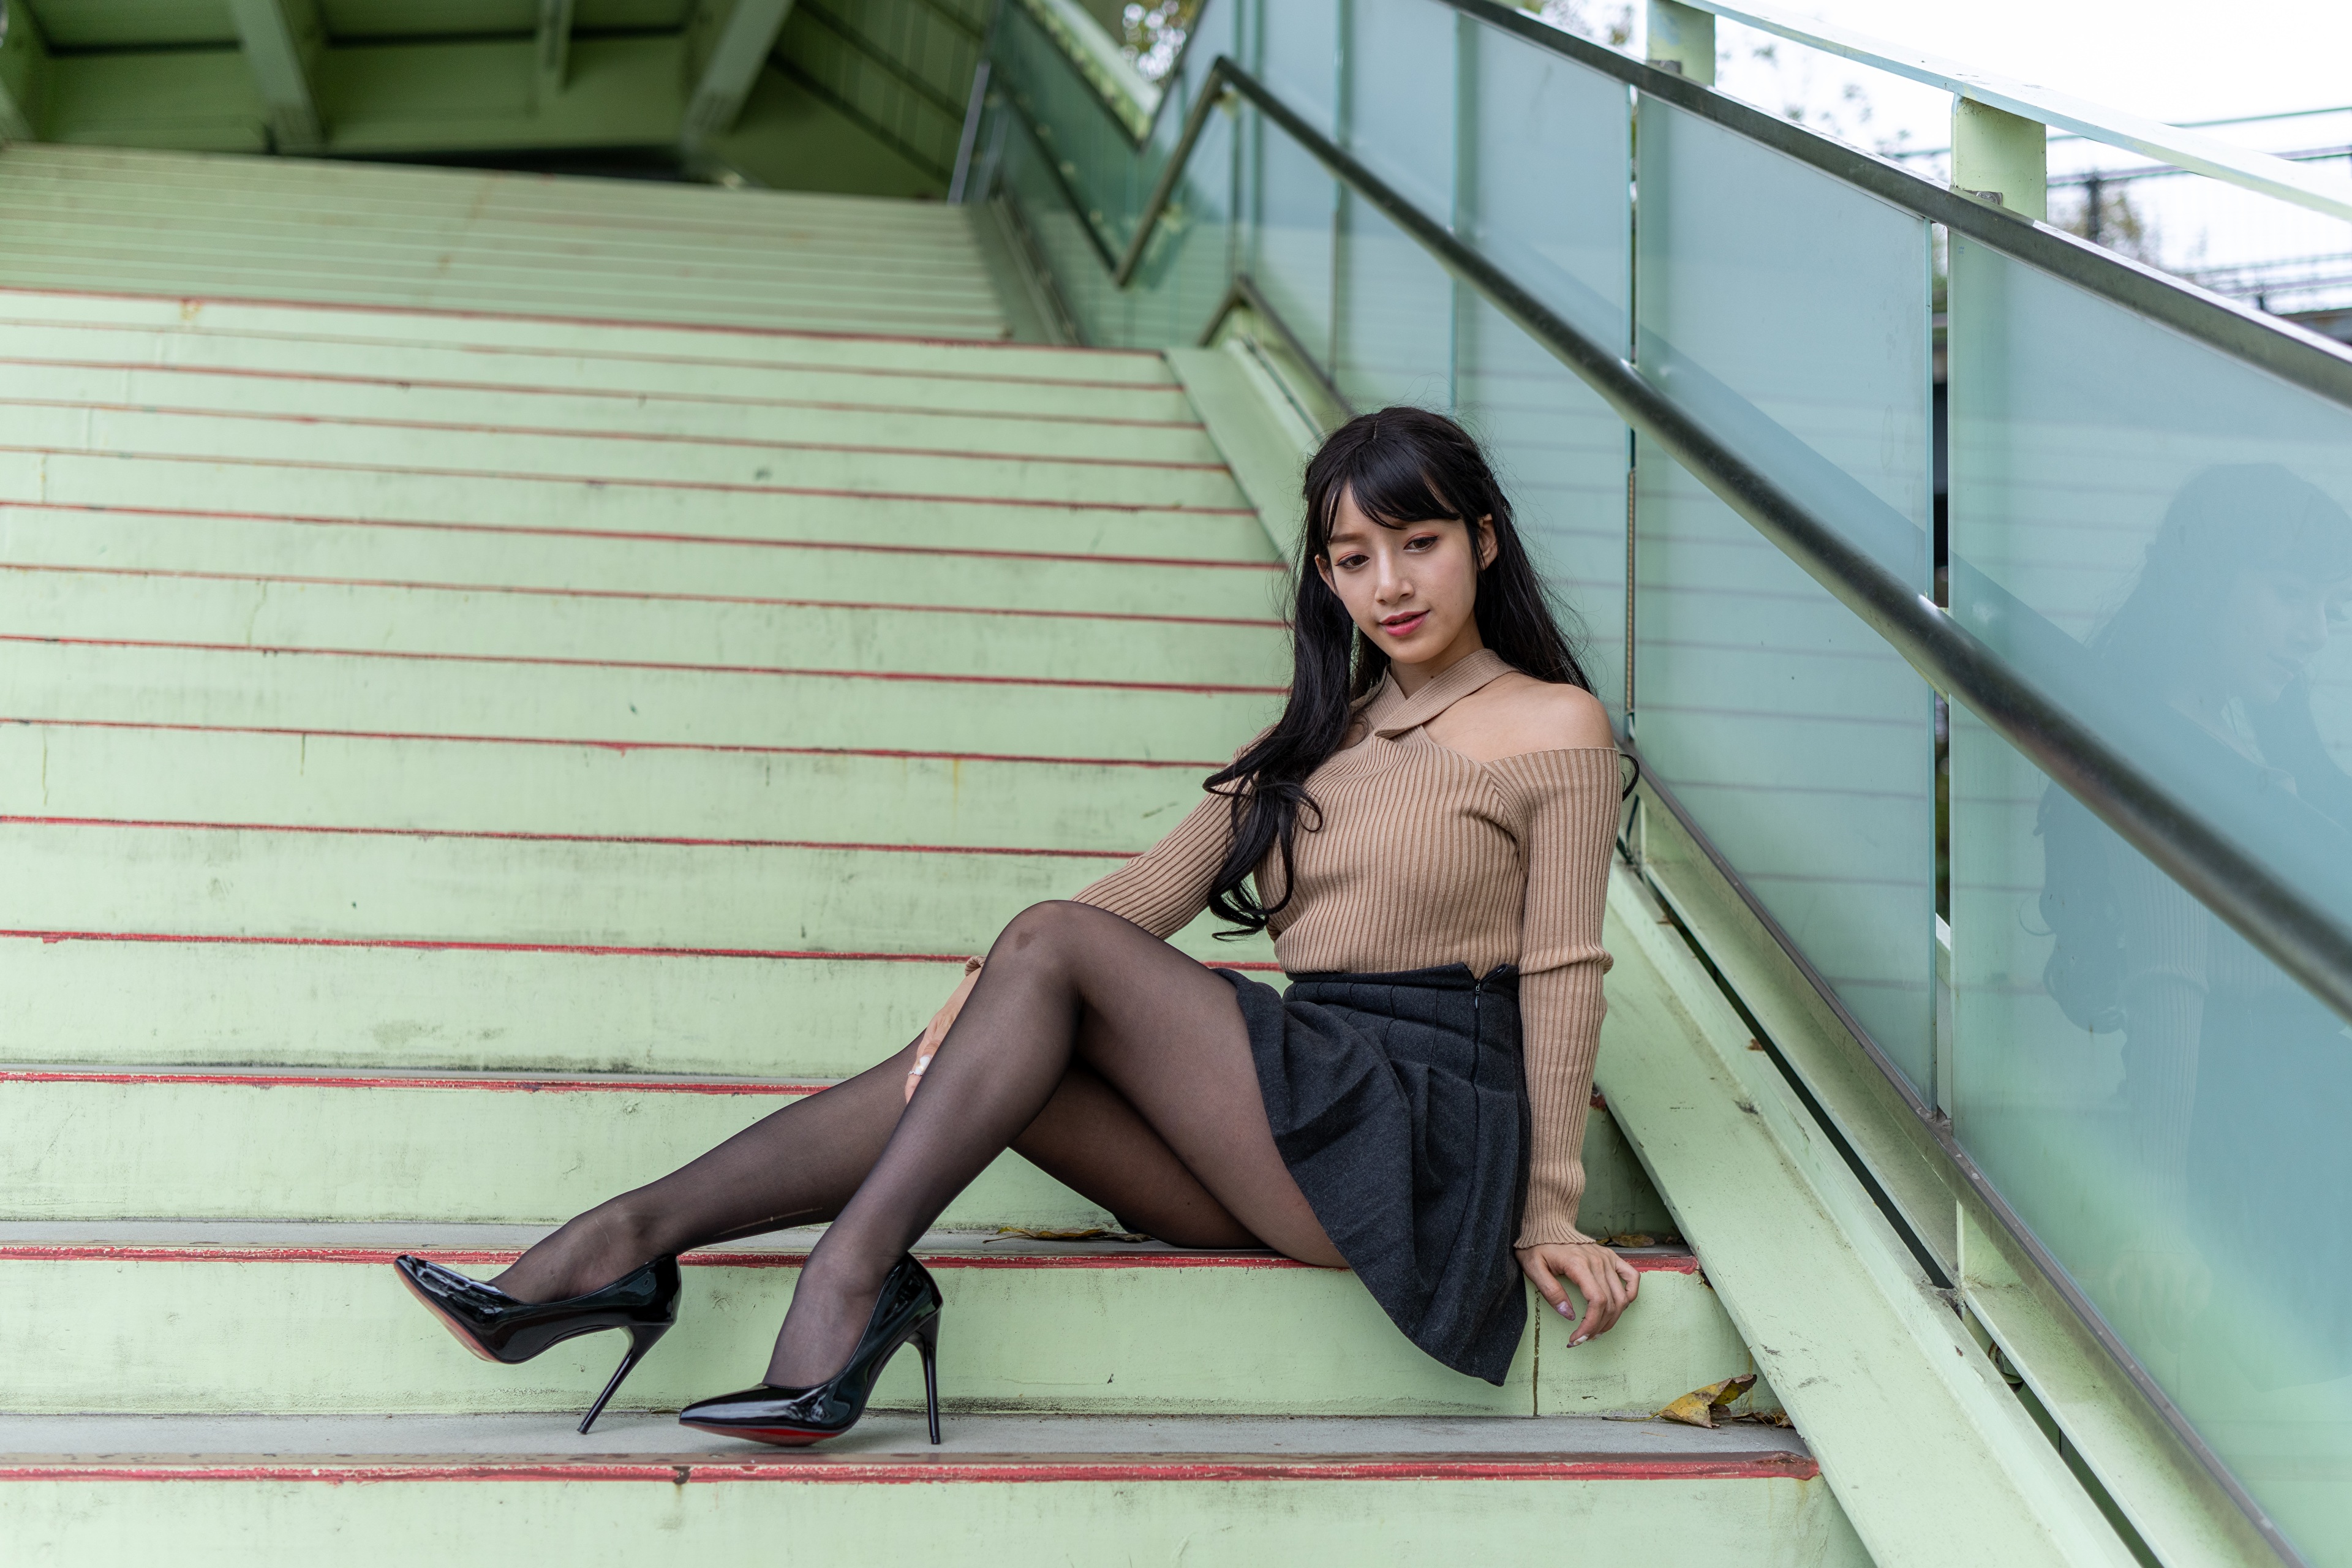 Asian Model Women Long Hair Dark Hair Sitting Black High Heels Nylons Black Skirts Stairs Iron Raili 3840x2560